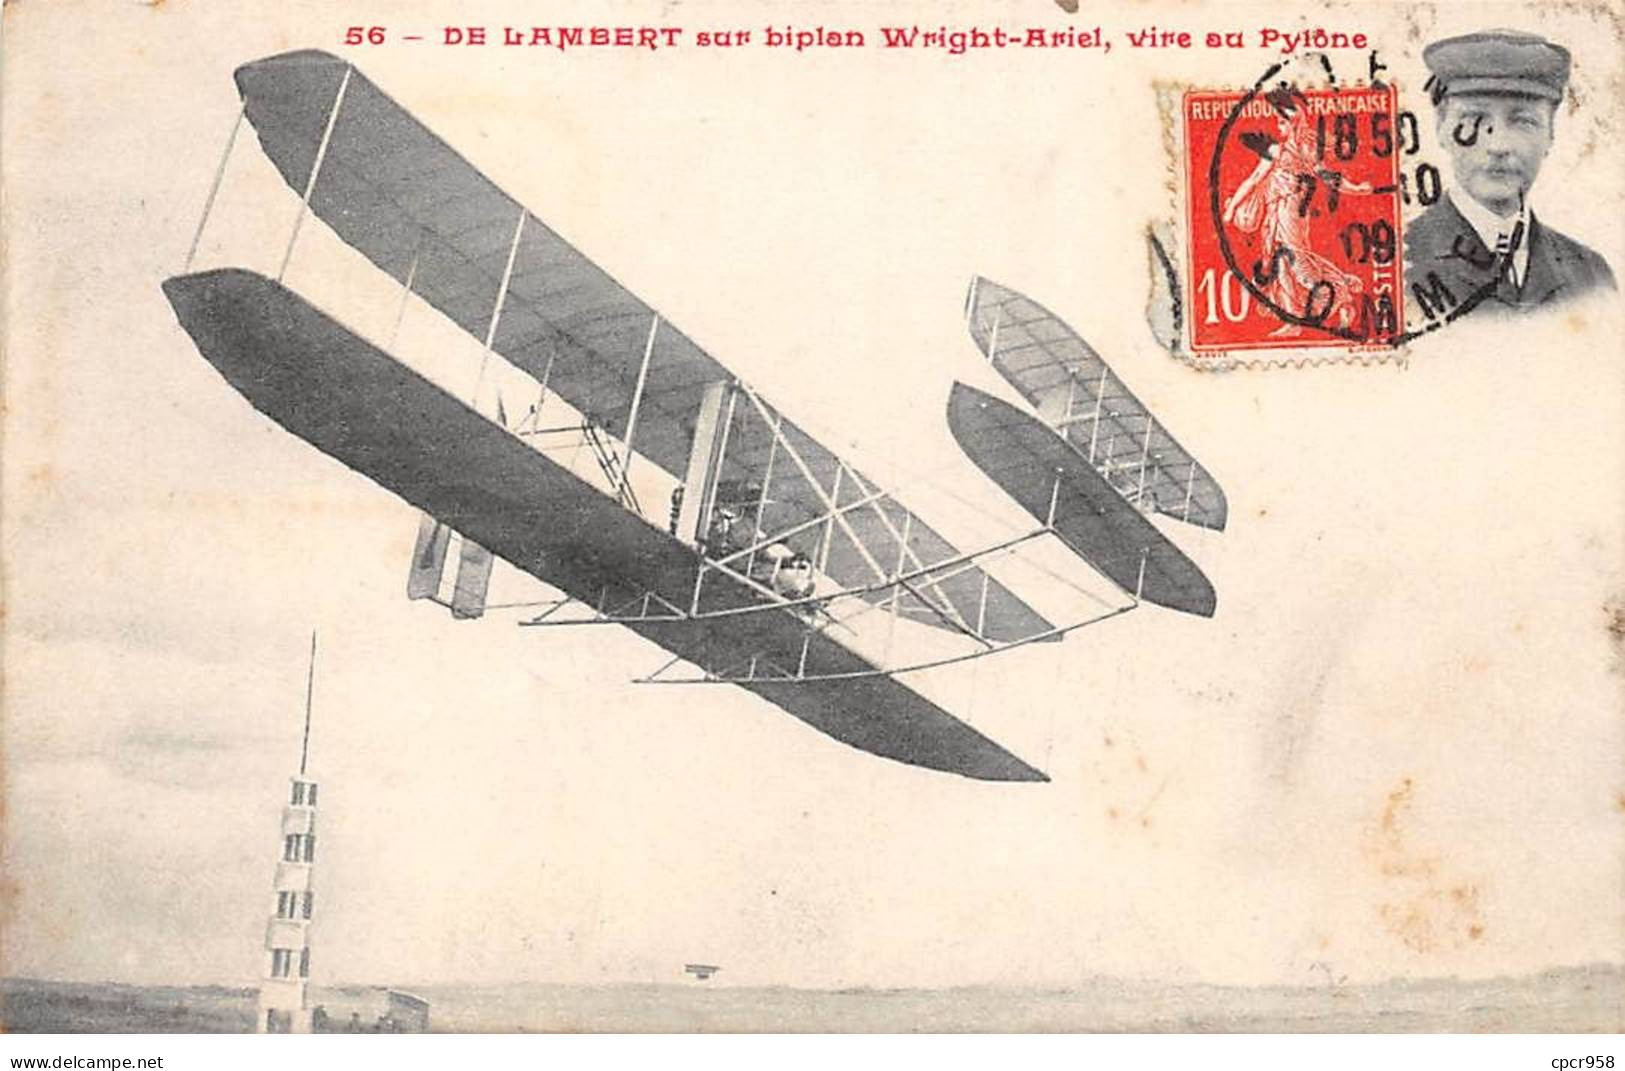 Aviation - N°81335 - De Lambert Sur Biplan Wright-Ariel, Vire Au Pylône - Aviateurs